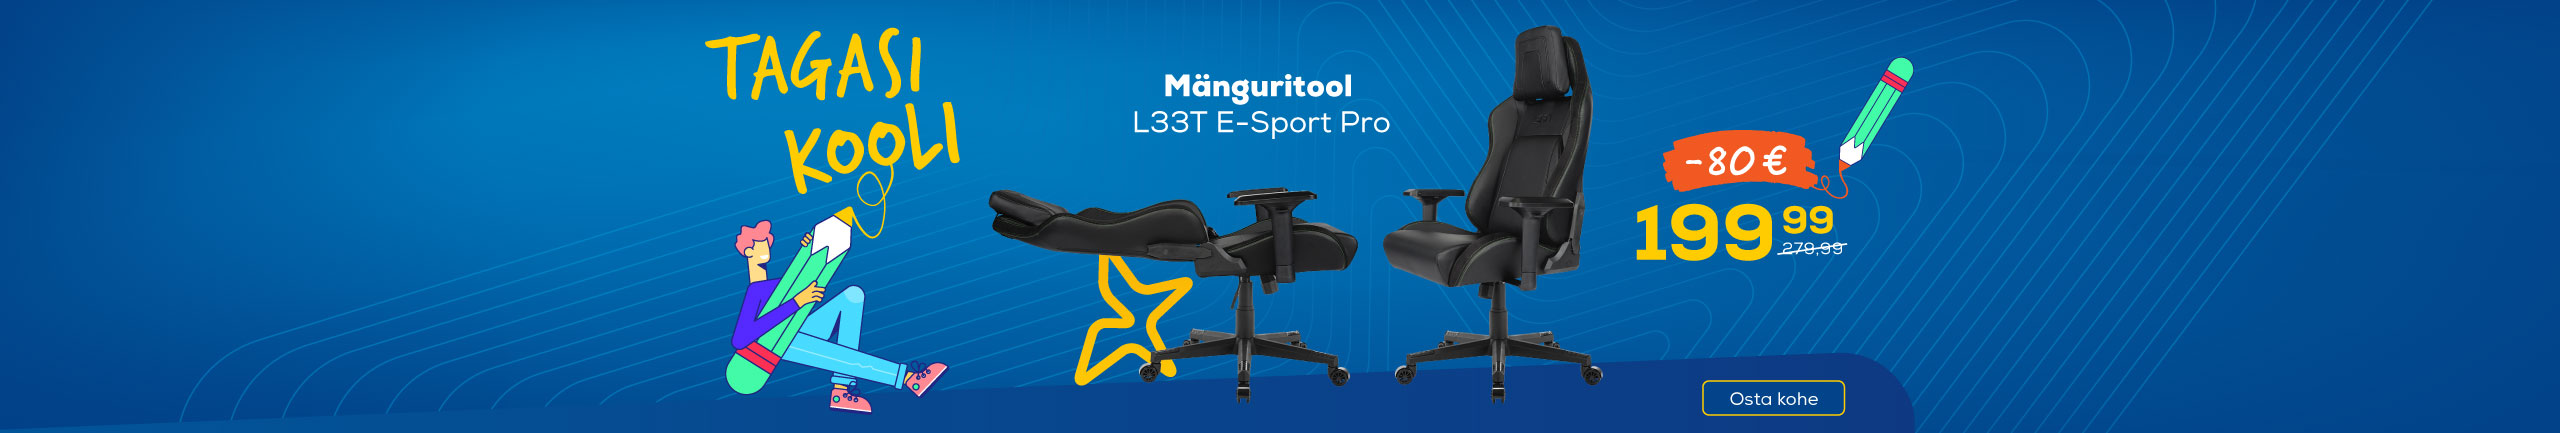 Gaming chair El33t E-Sport Pro